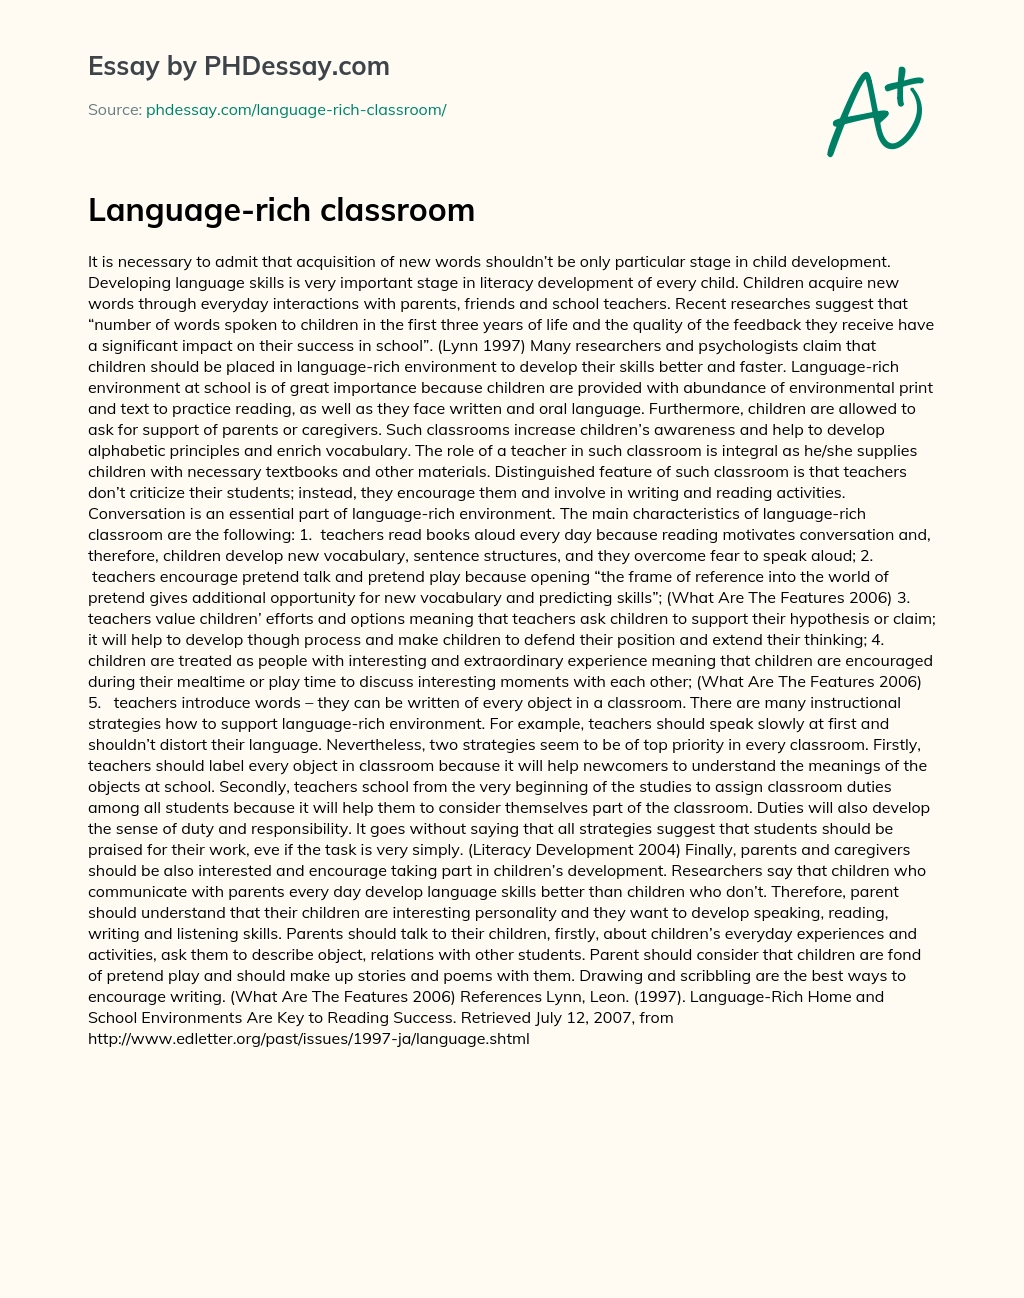 Language-rich classroom essay